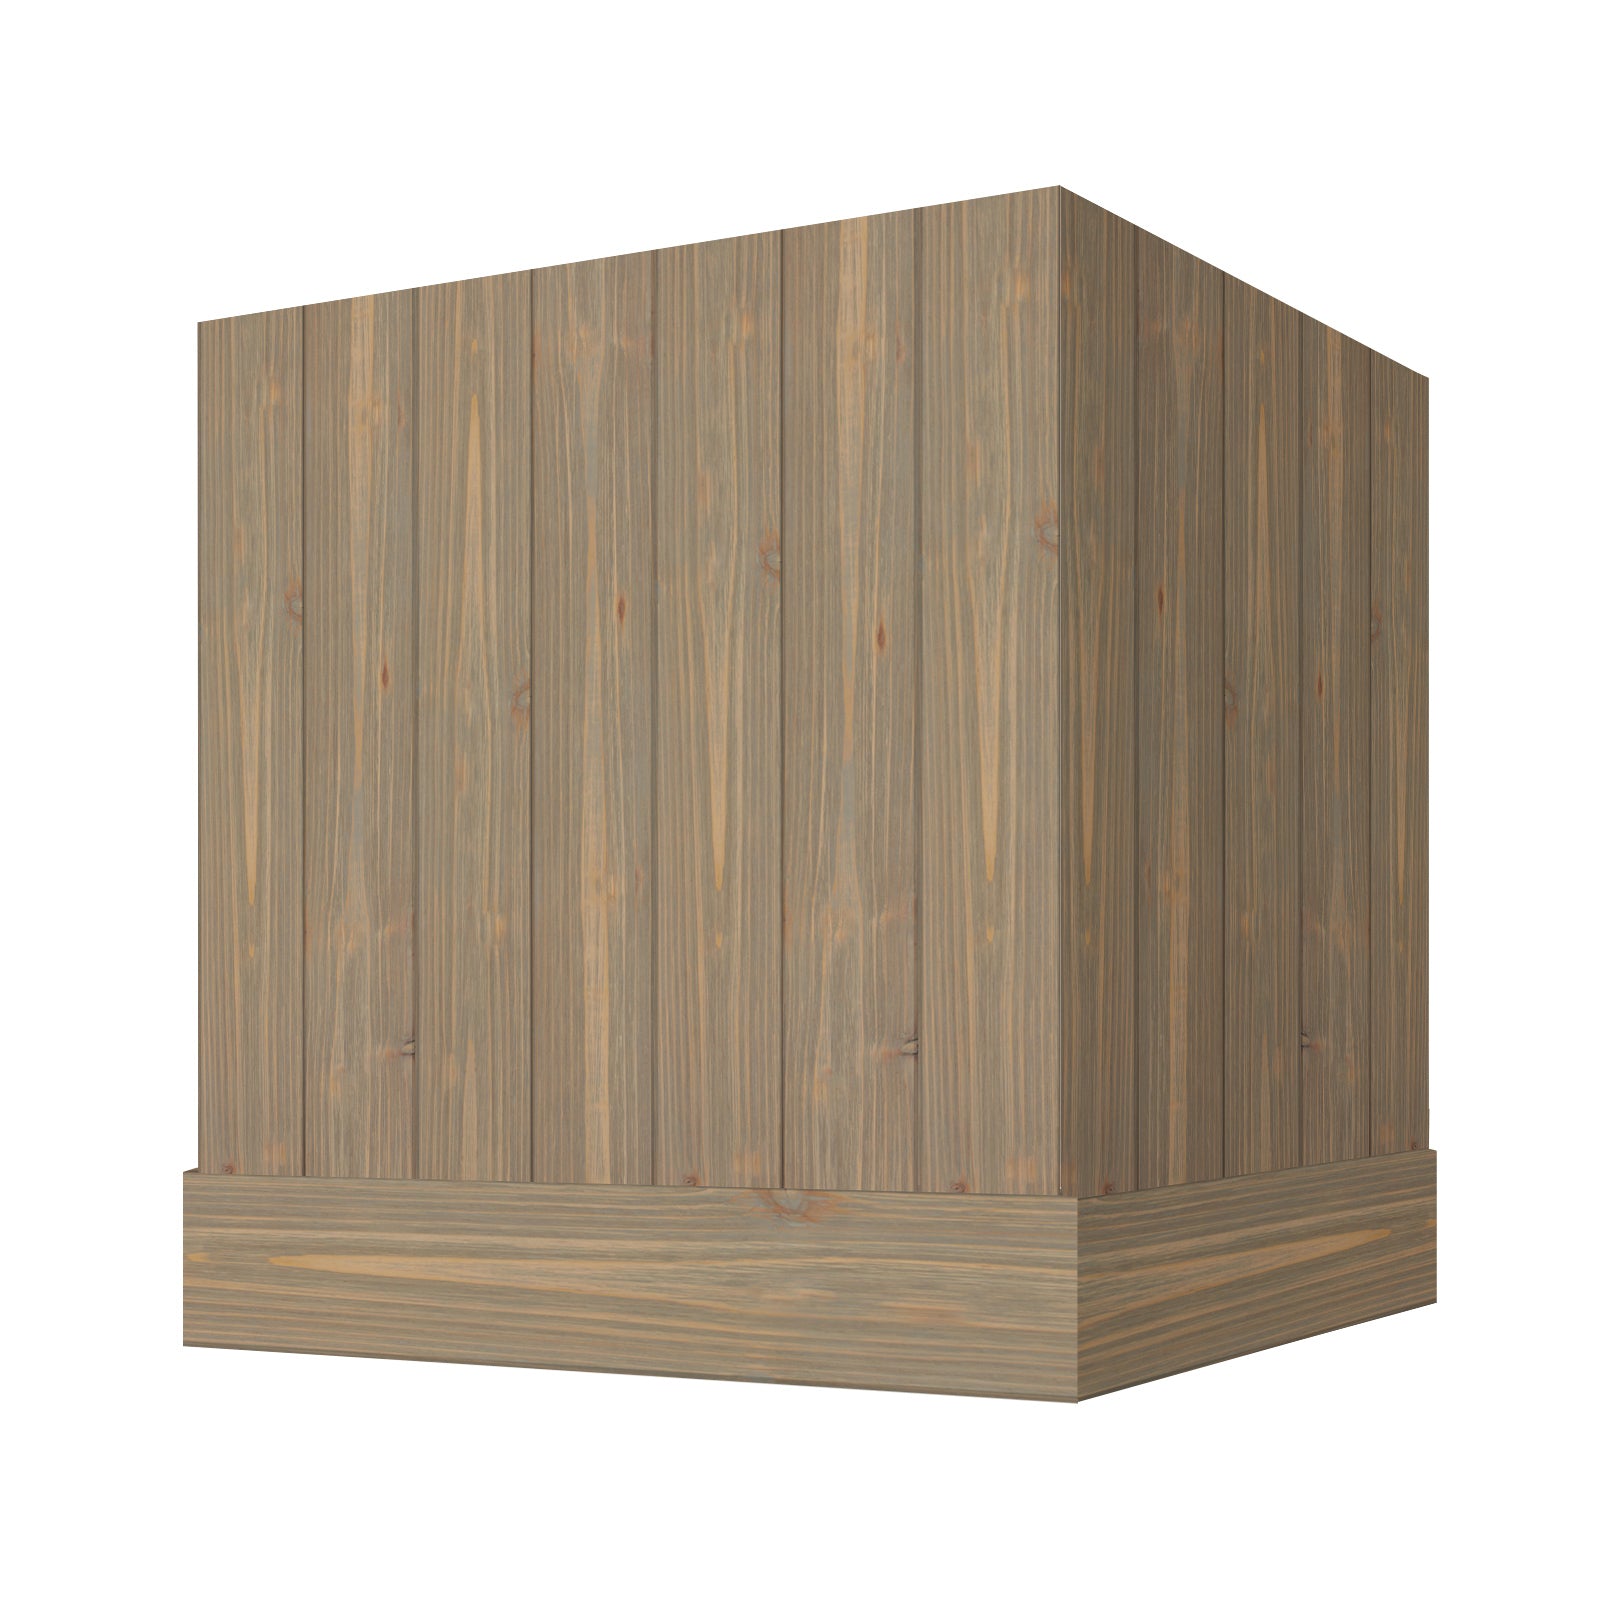 Custom Rustic Range Hood, Reclaimed Barn Wood Vent Hood with Insert Ventilator & Decorative Molding Trim, Modern A Series